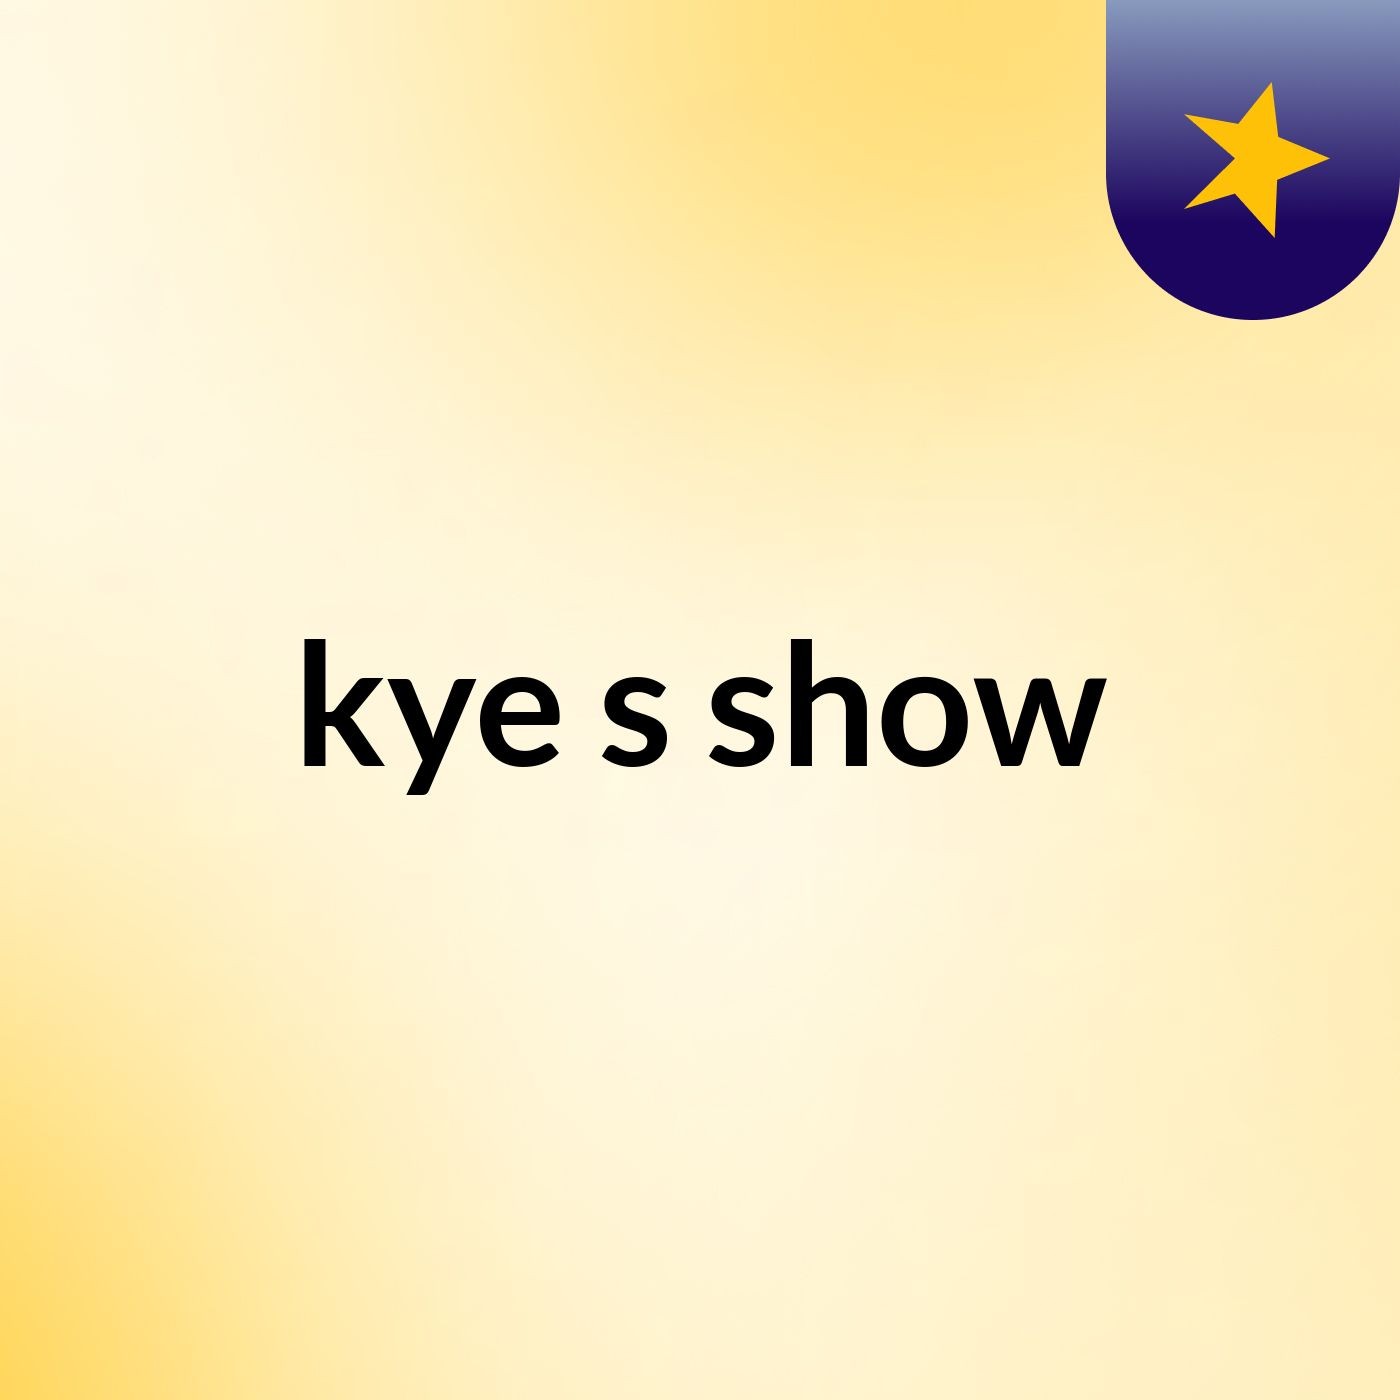 kye's show